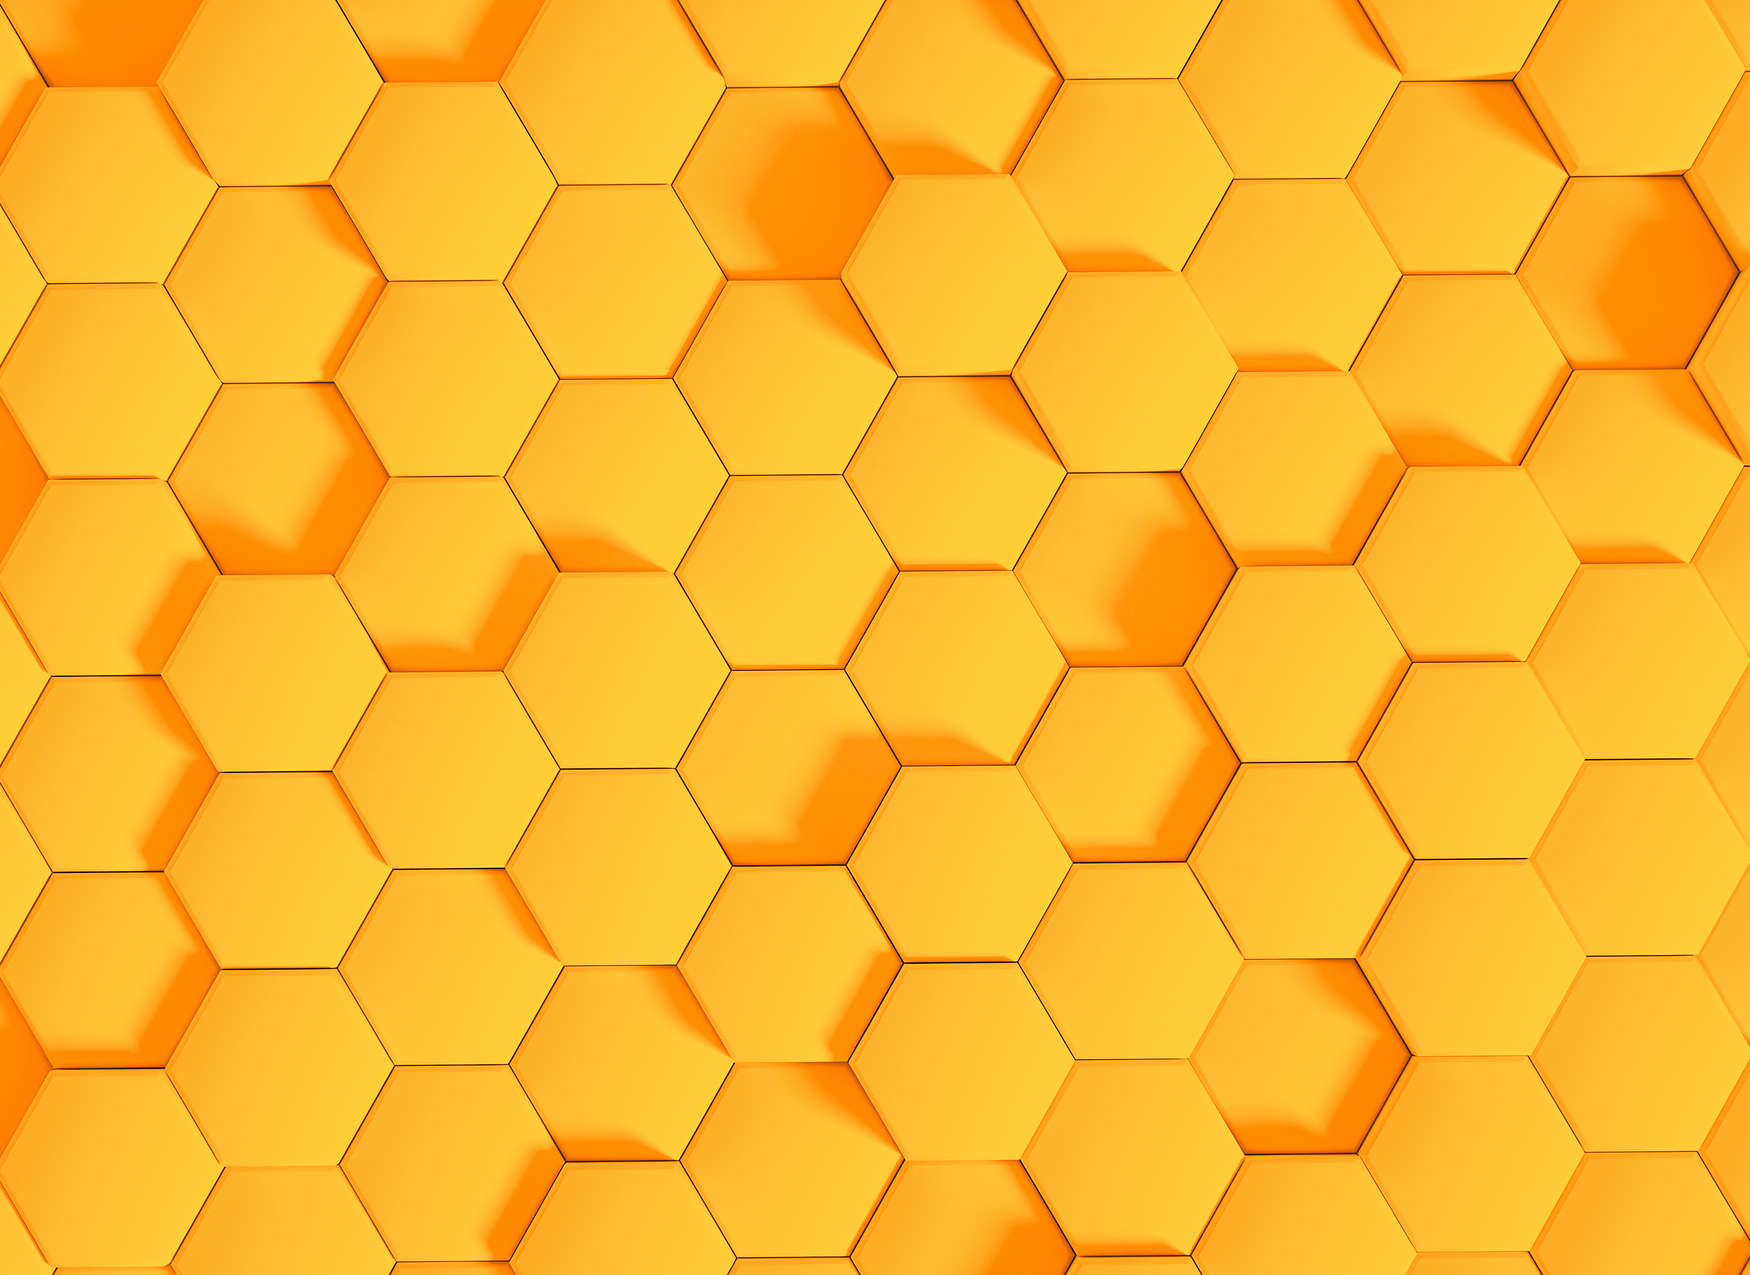             Papel pintado de nido de abeja con óptica 3D - Naranja
        